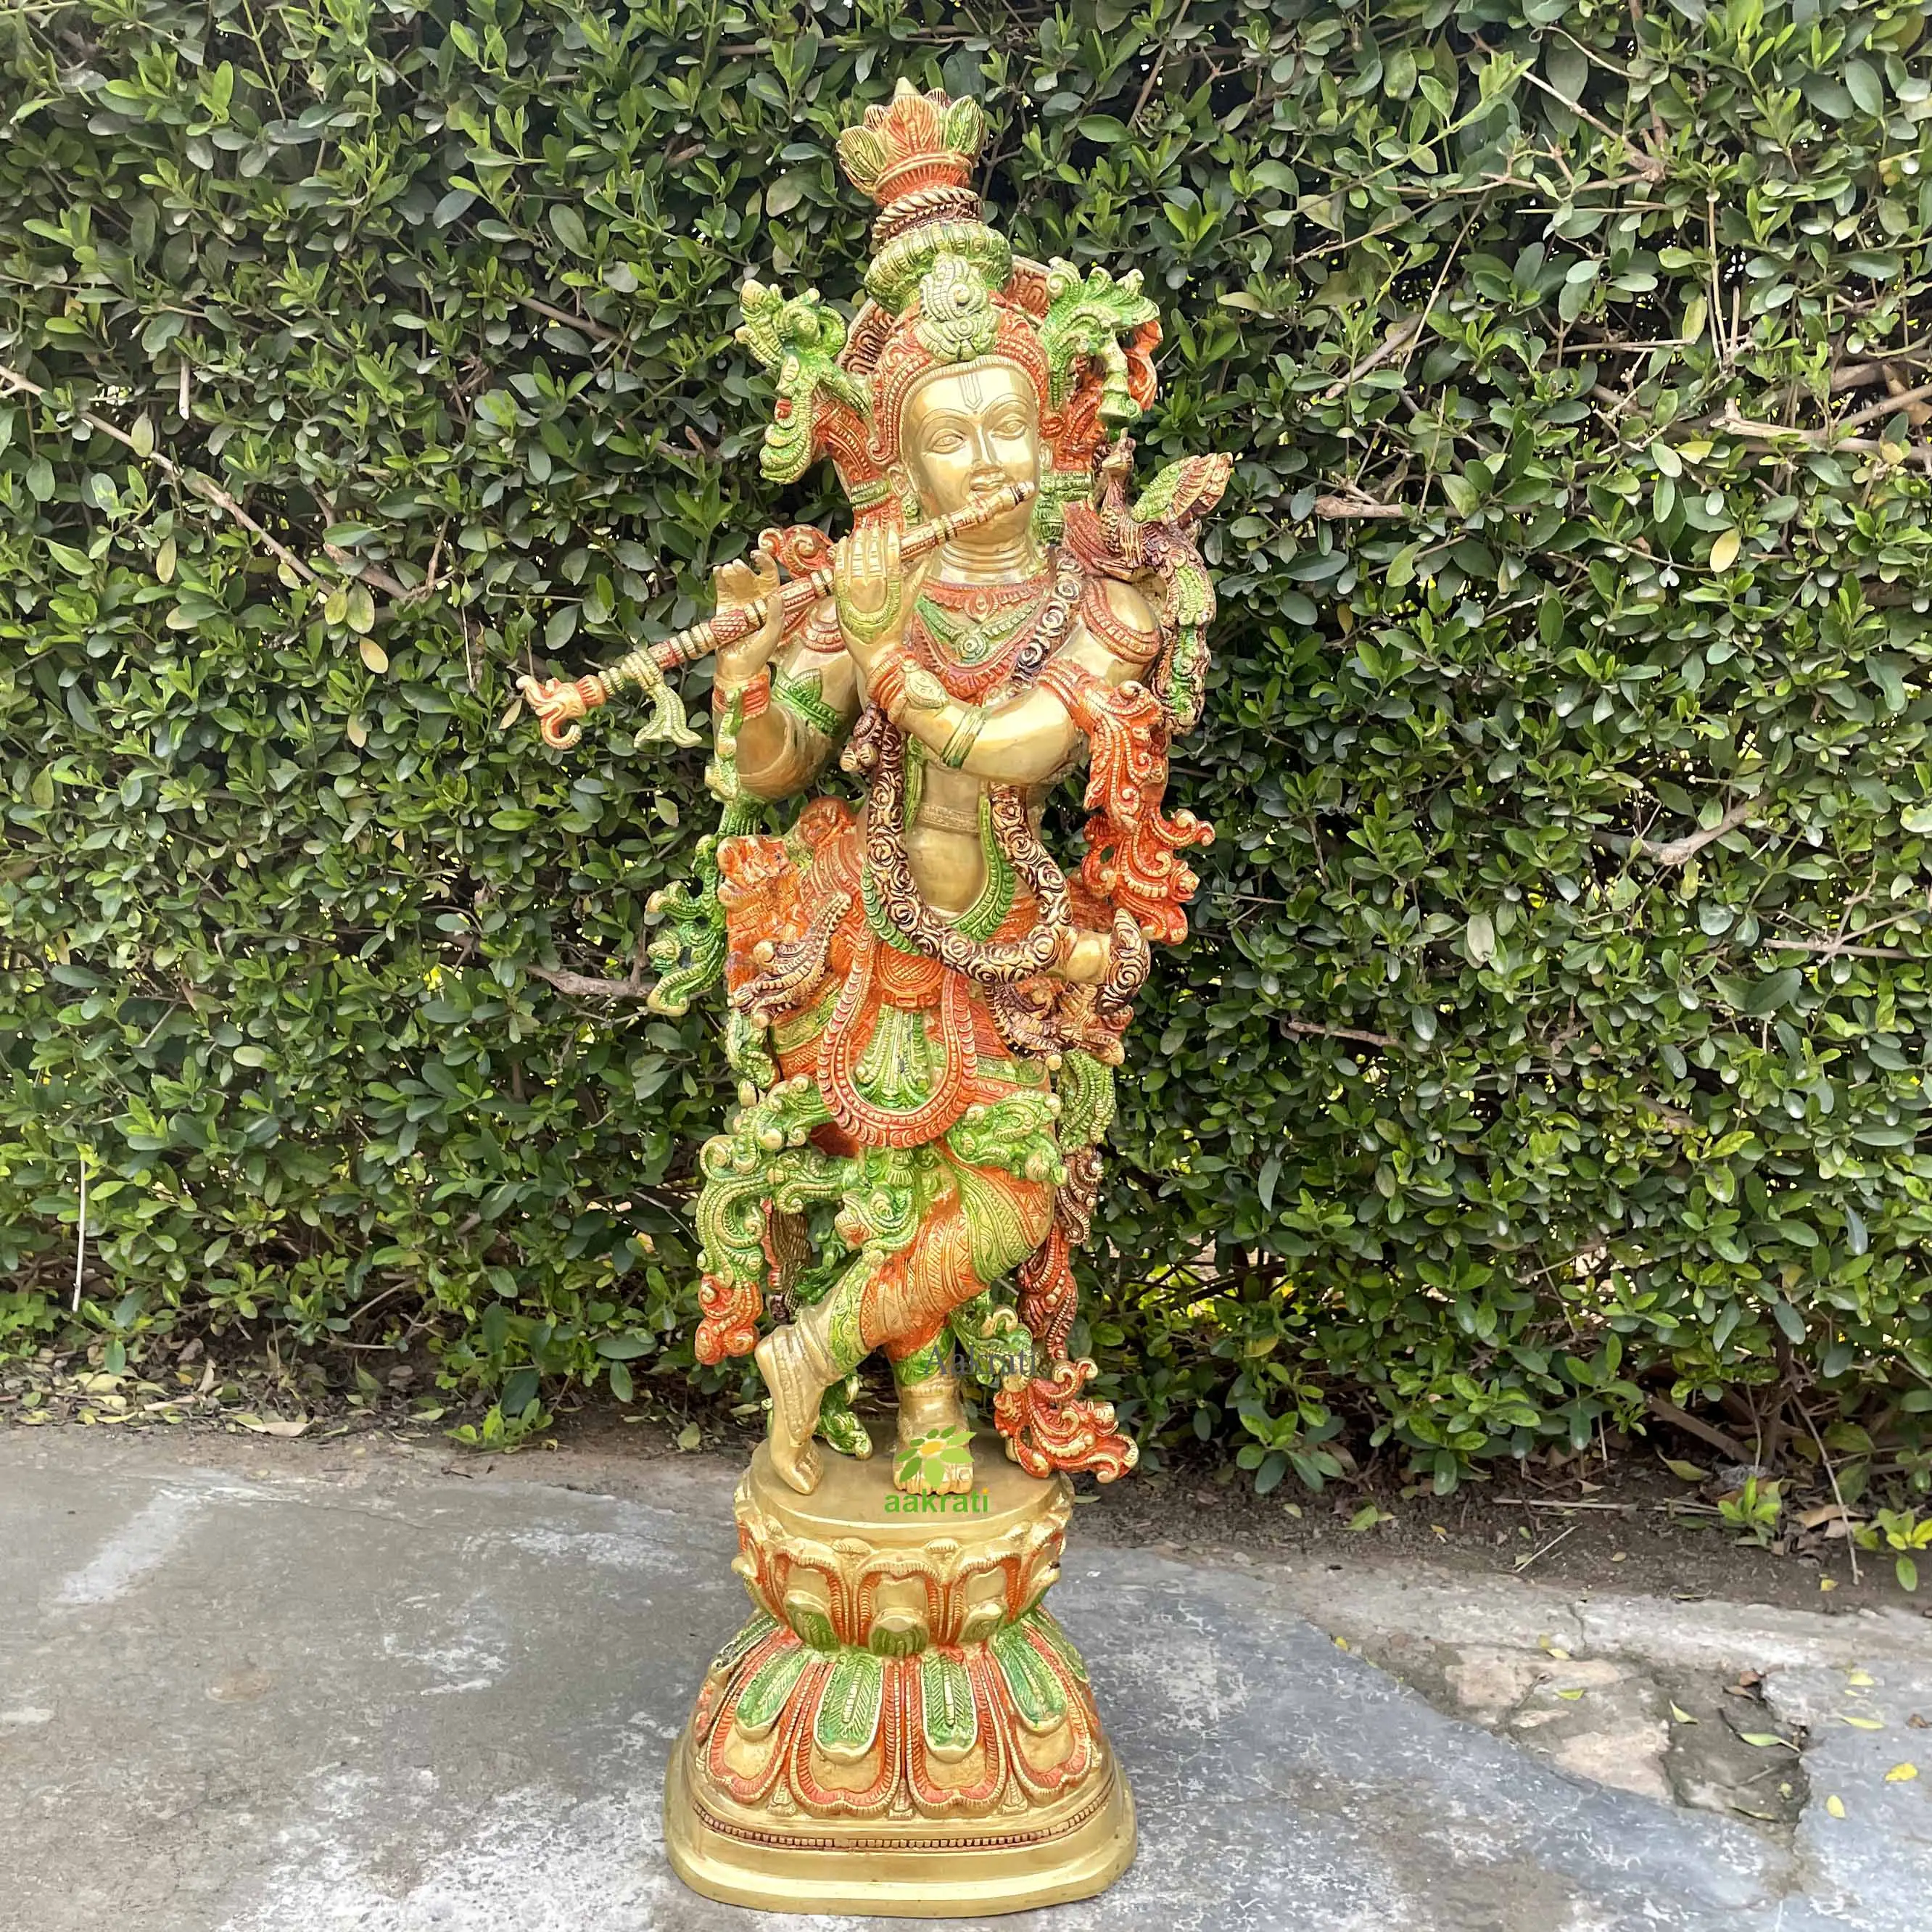 Messing handgemachte Krishna Statue Gott des Liebhabers Jubiläums geschenk Tempel Home Pooja Dekor Geschenk